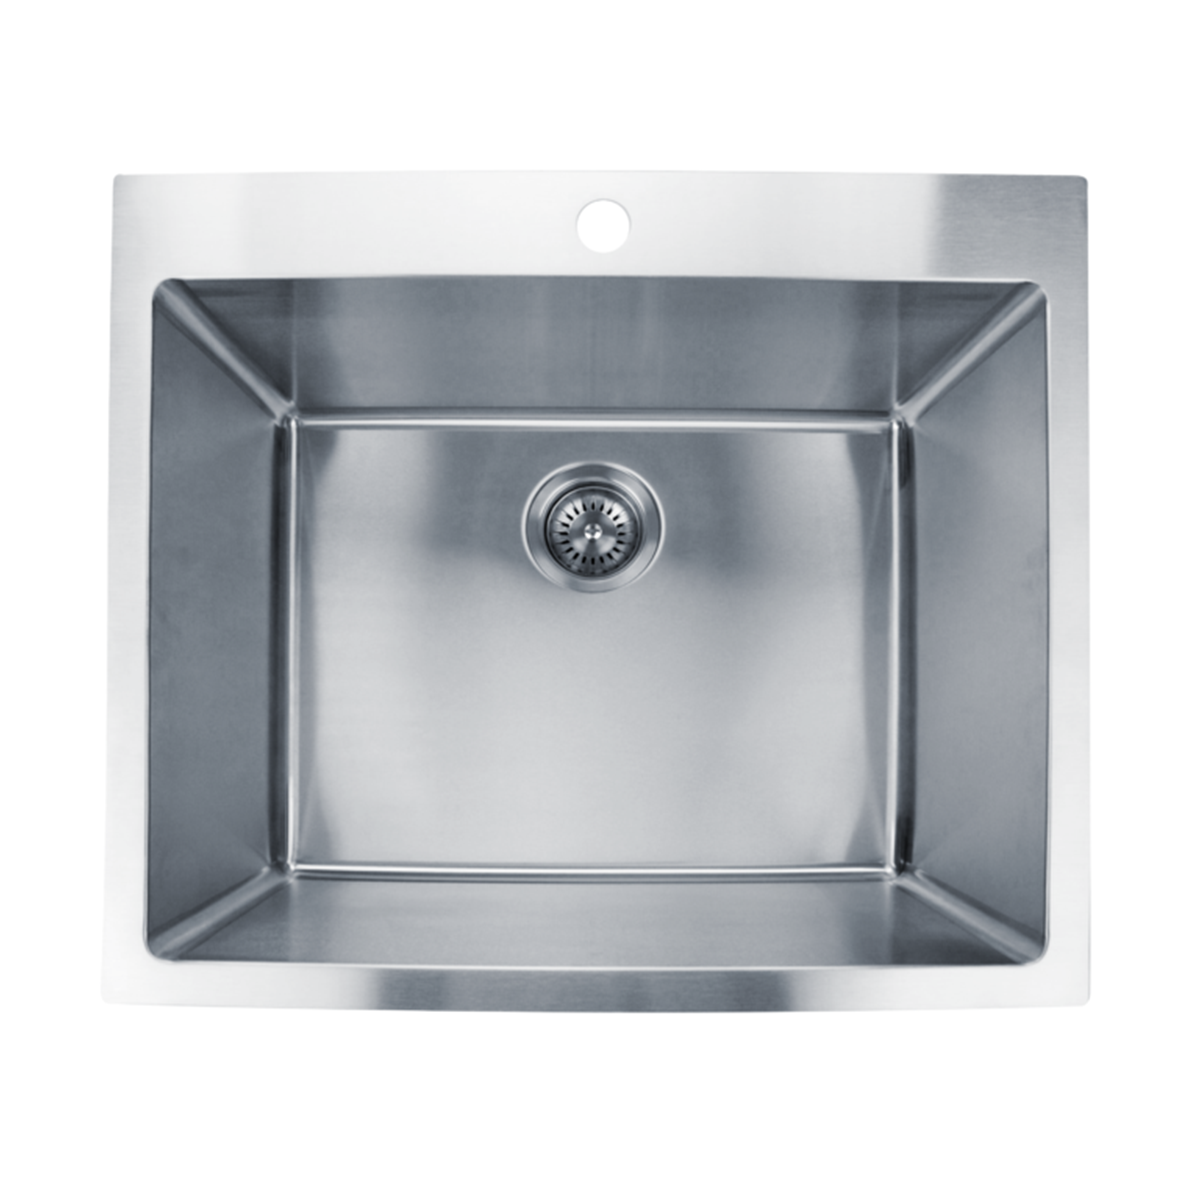 Pelican Int'l Handmade Series PL-LS2522 16 Gauge Stainless Steel Laundry Sink 25" x 22" with Micro Radius Corners